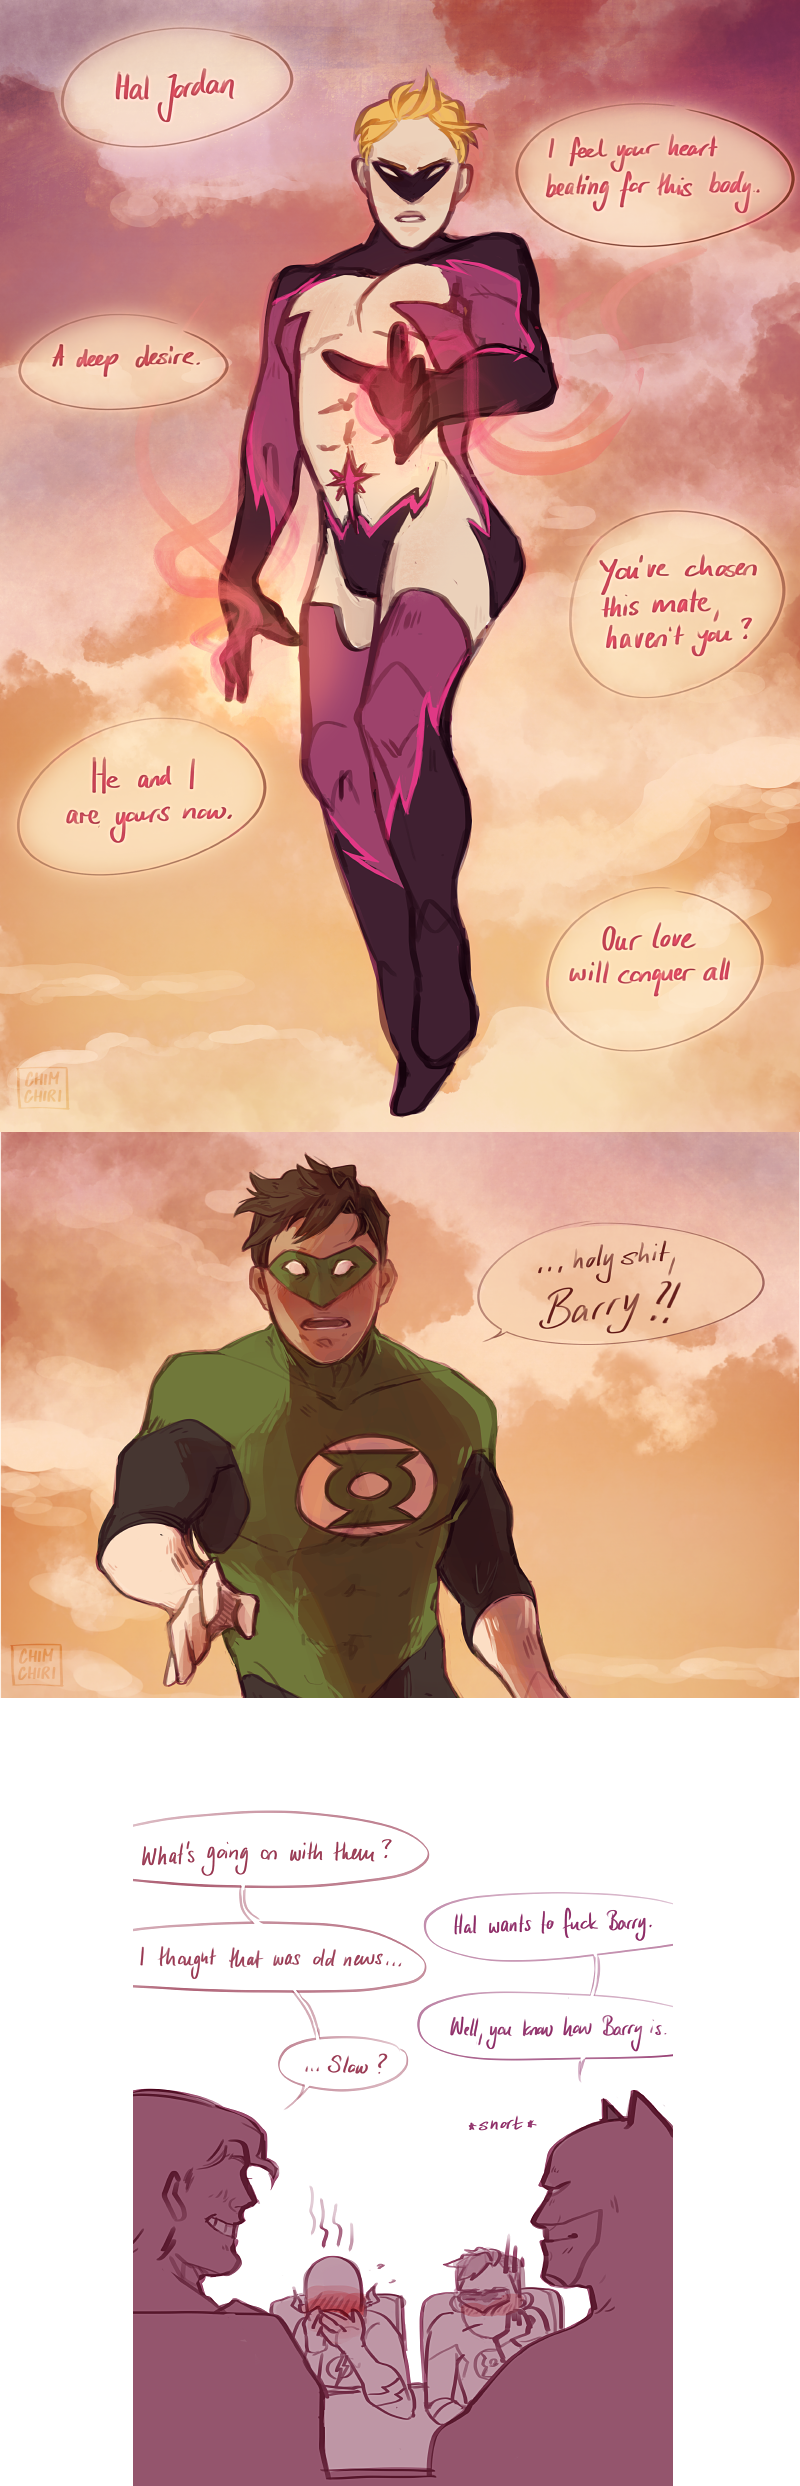 Hal Jordan vs Barry allen - Battles - Comic Vine